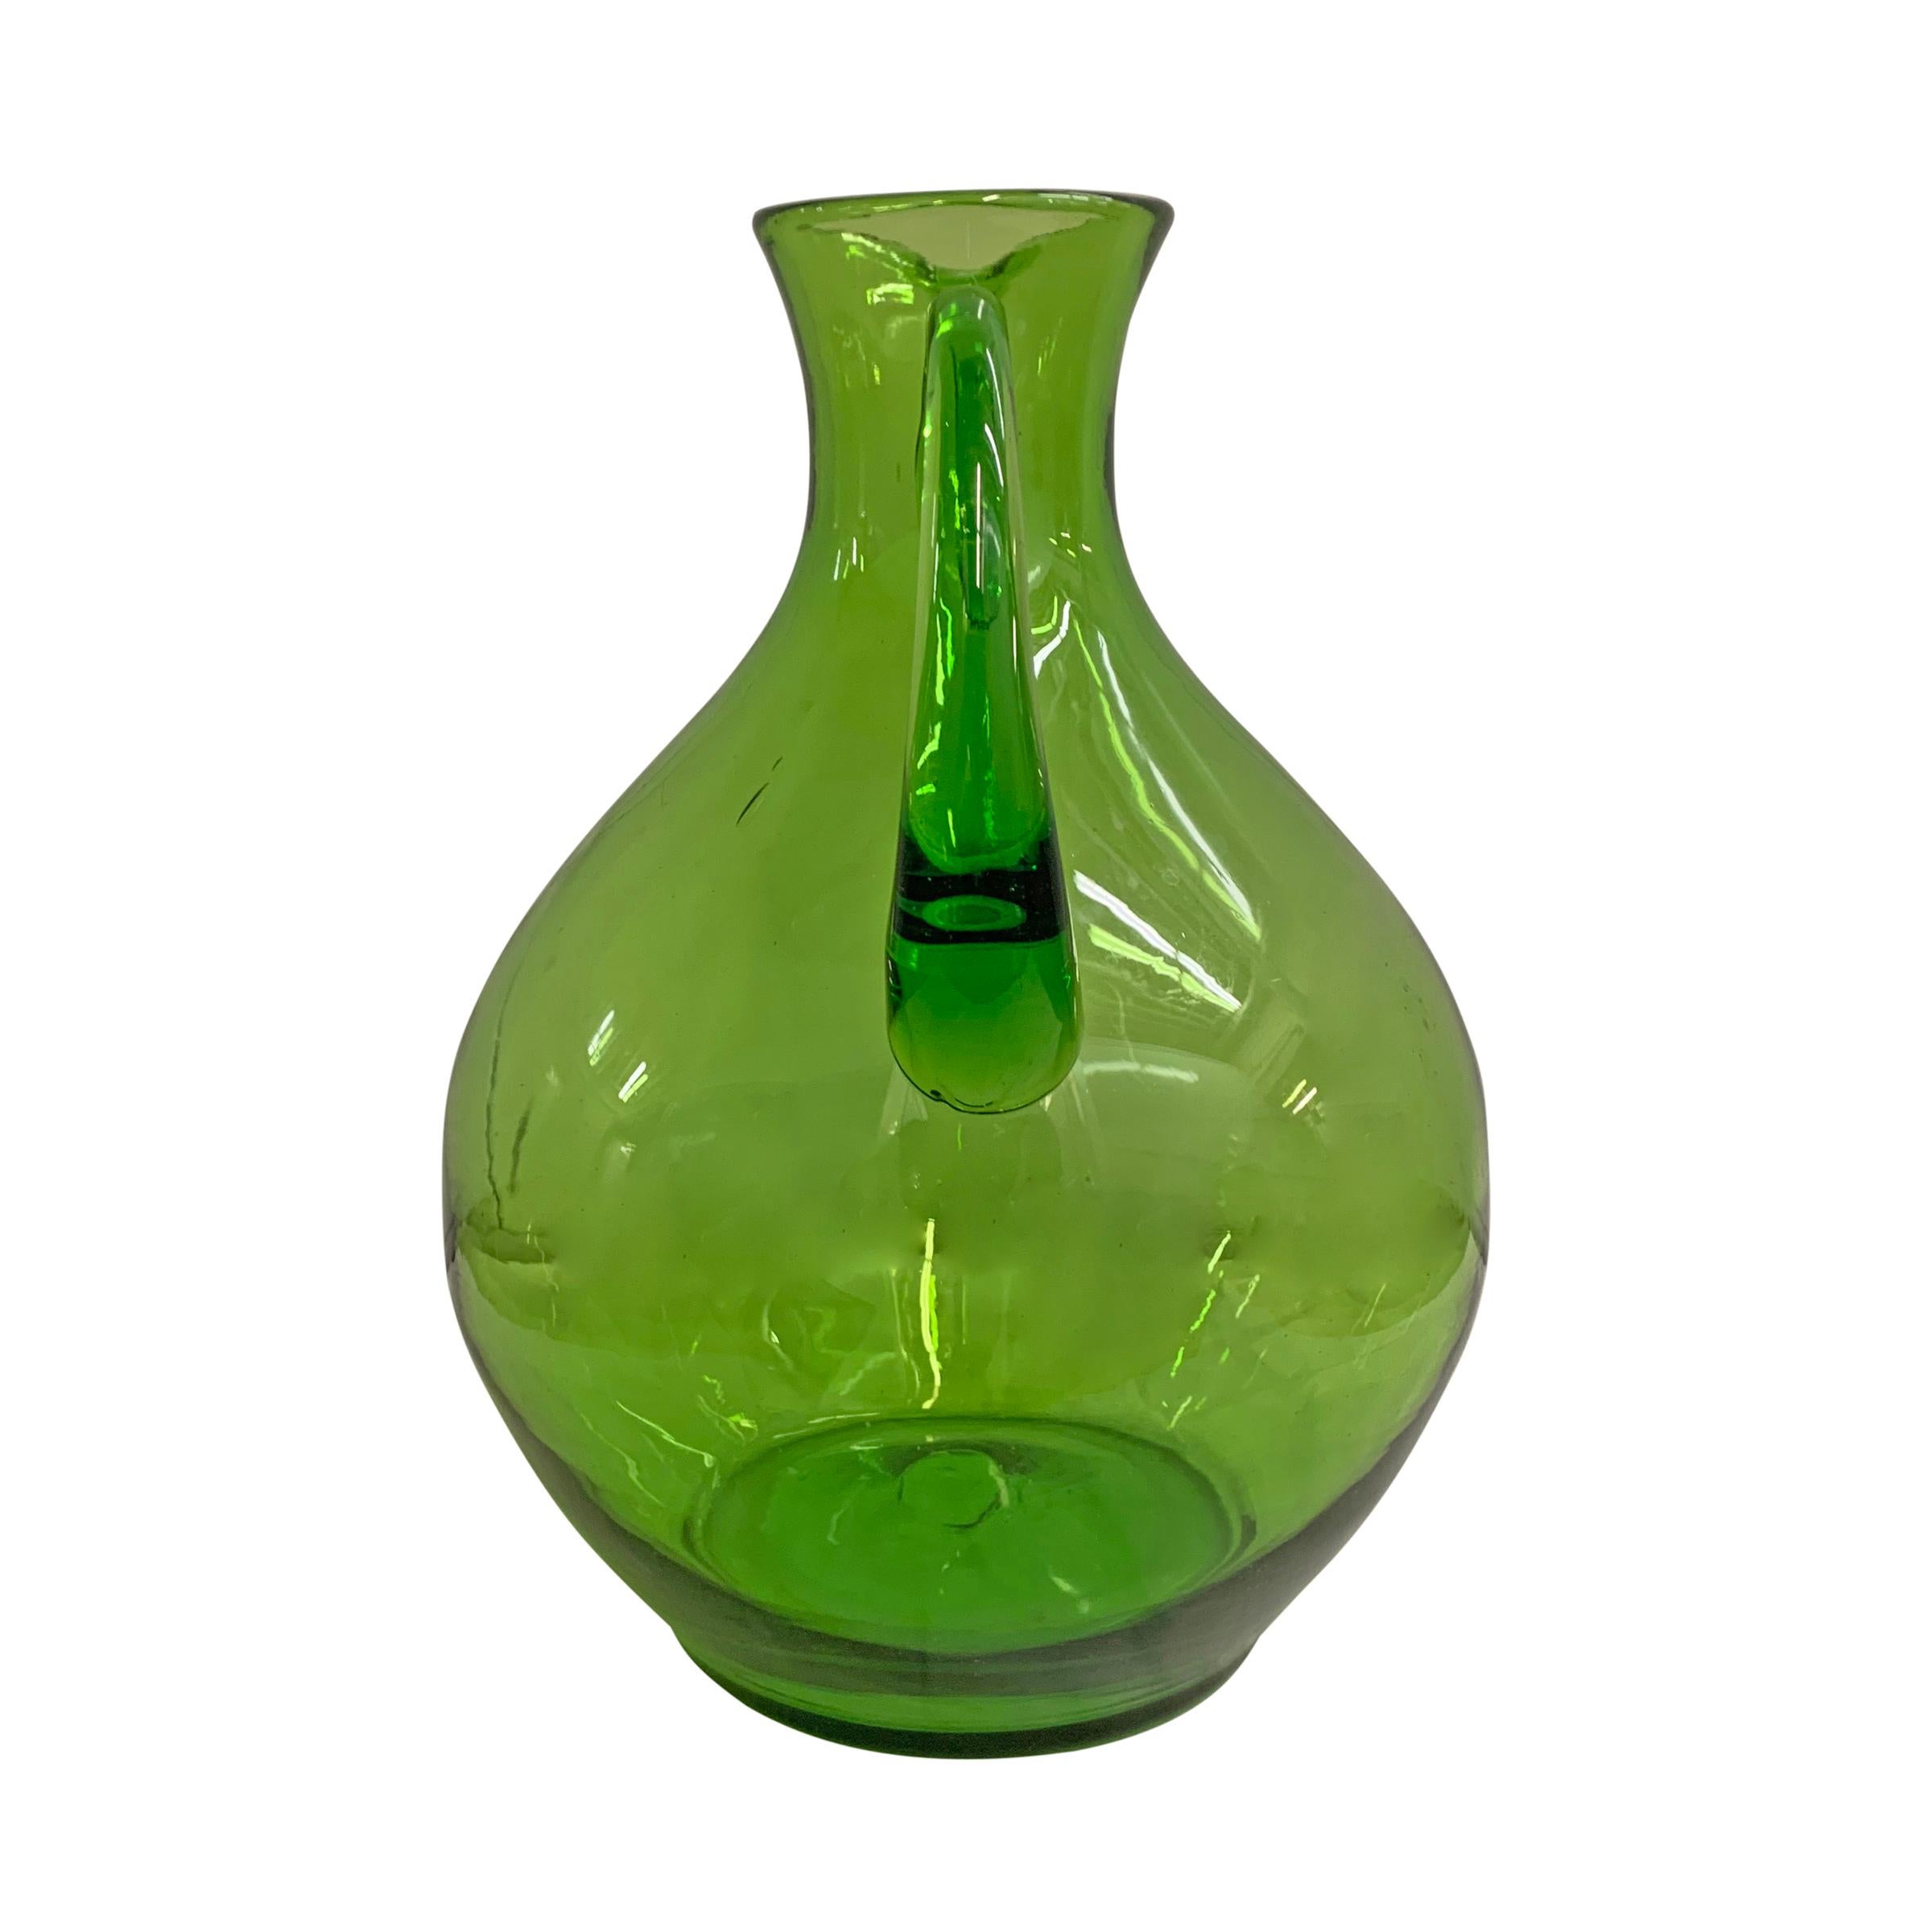 green glass pitcher vintage